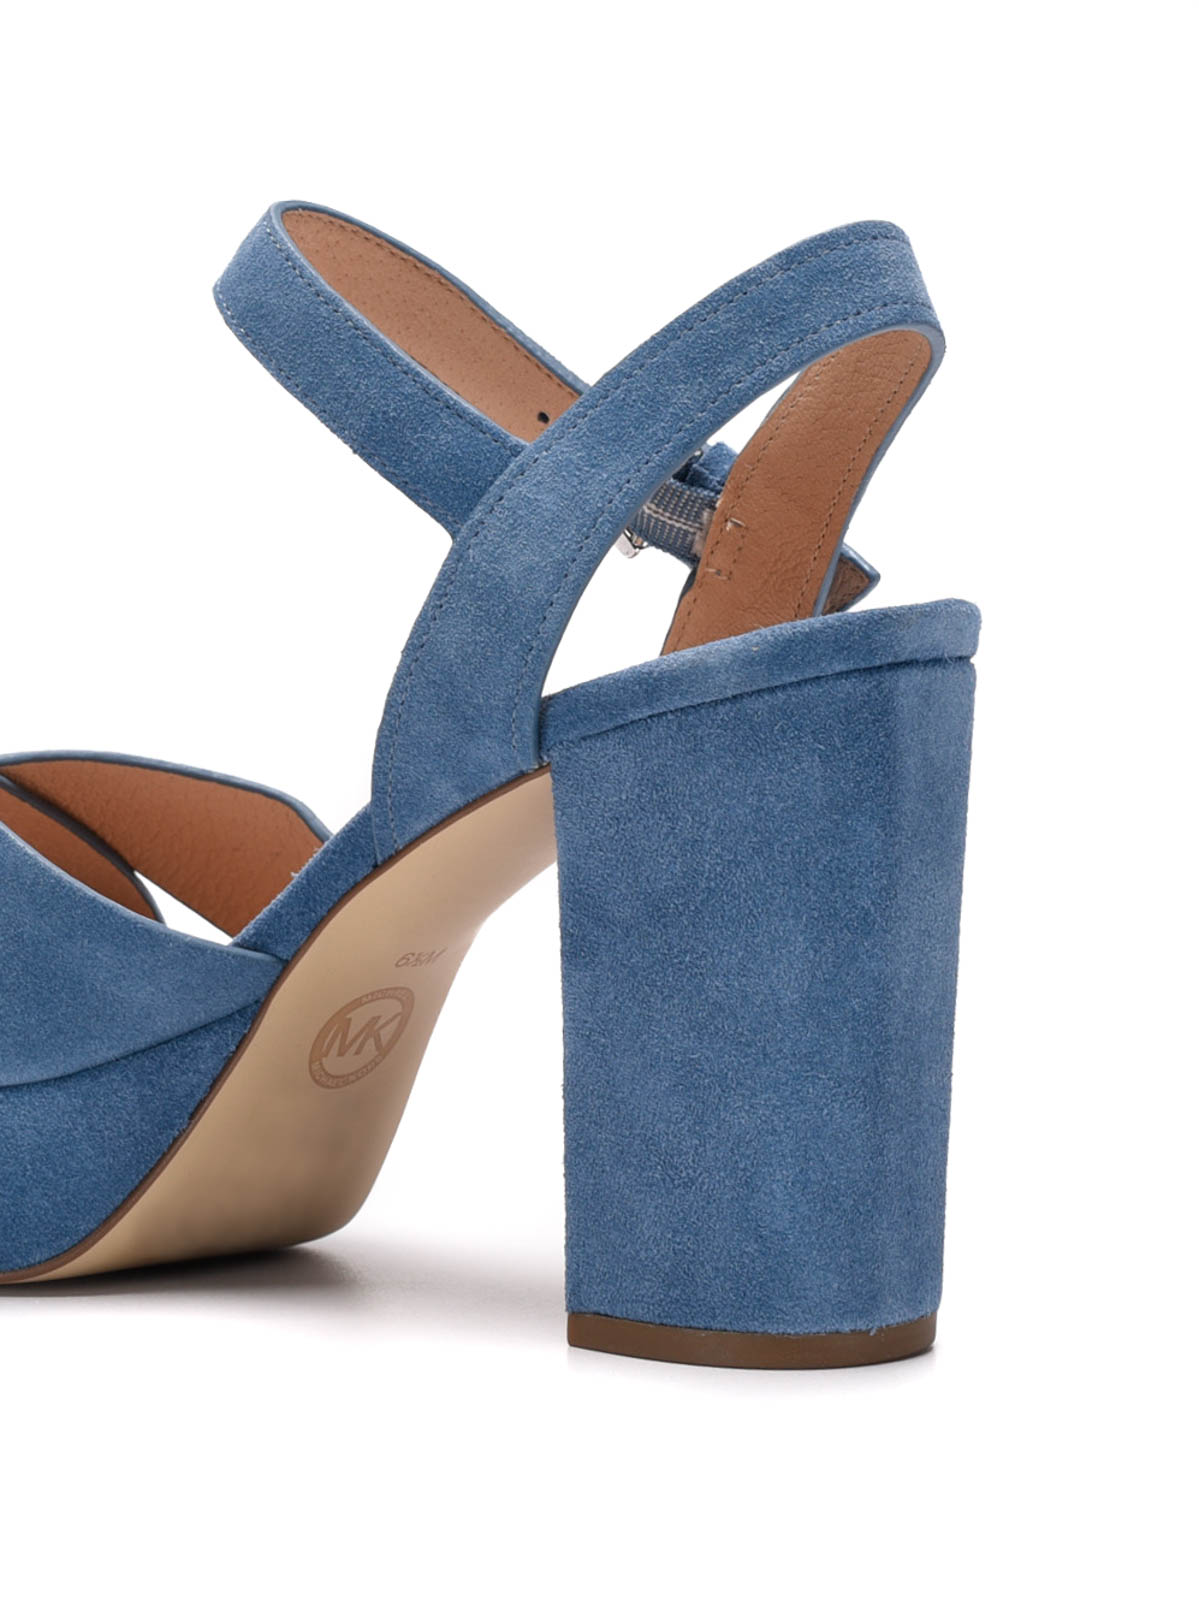 Women039s Shoes Michael Kors Divia Platform Heels Sandal Suede BLACK  Size 7  eBay